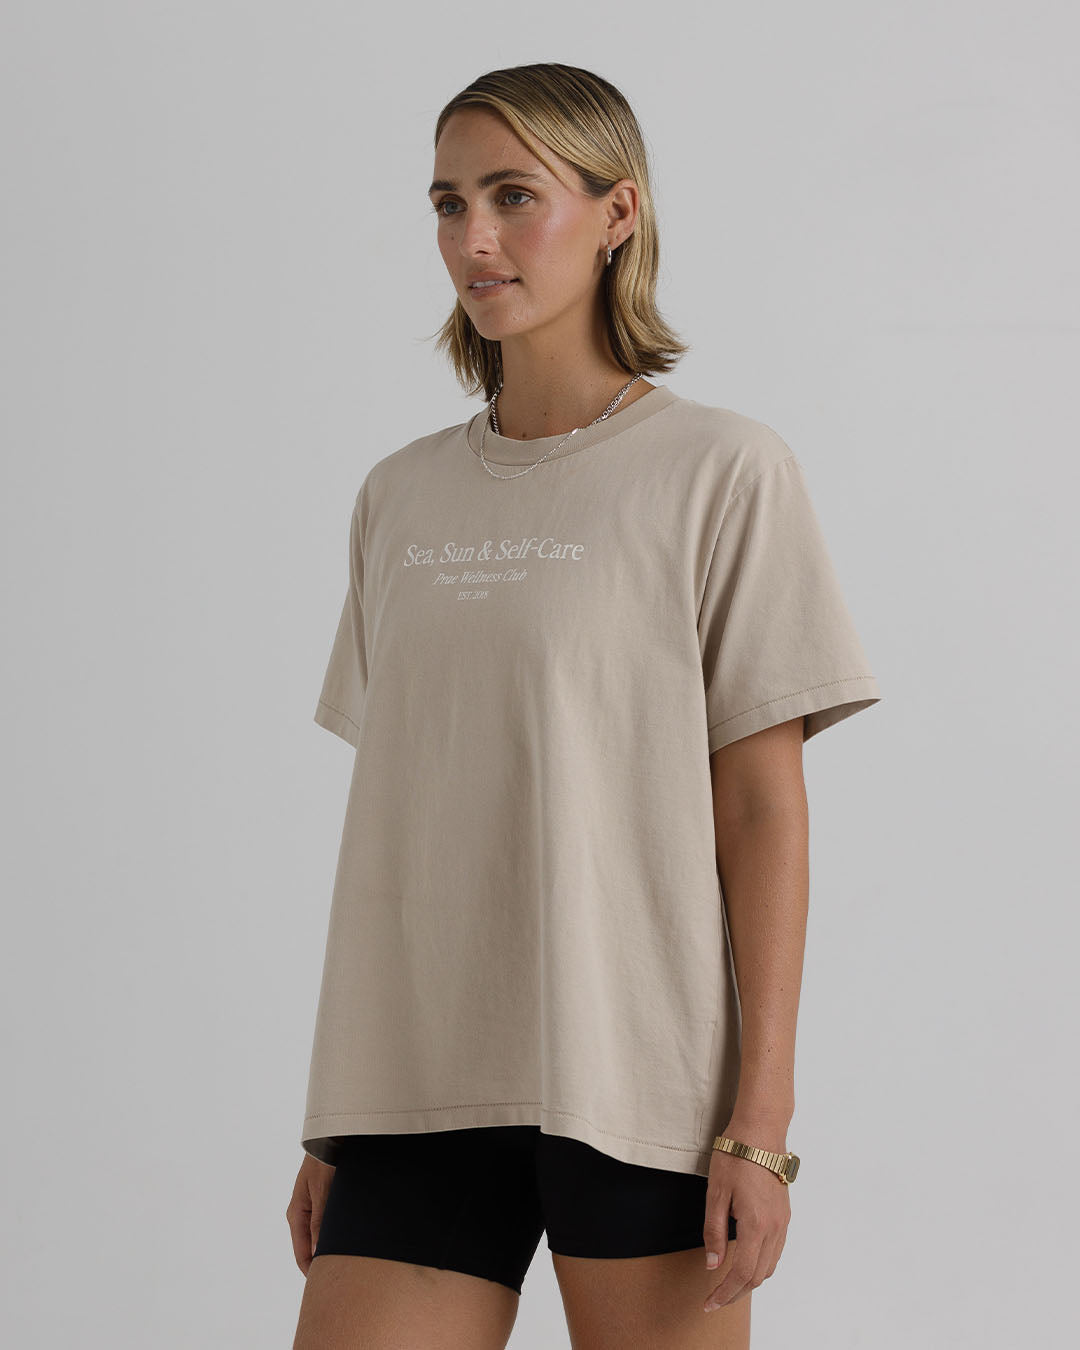 Sun Sea and Self Care T-Shirt – Beige Tees by Prae Wellness - Prae Store